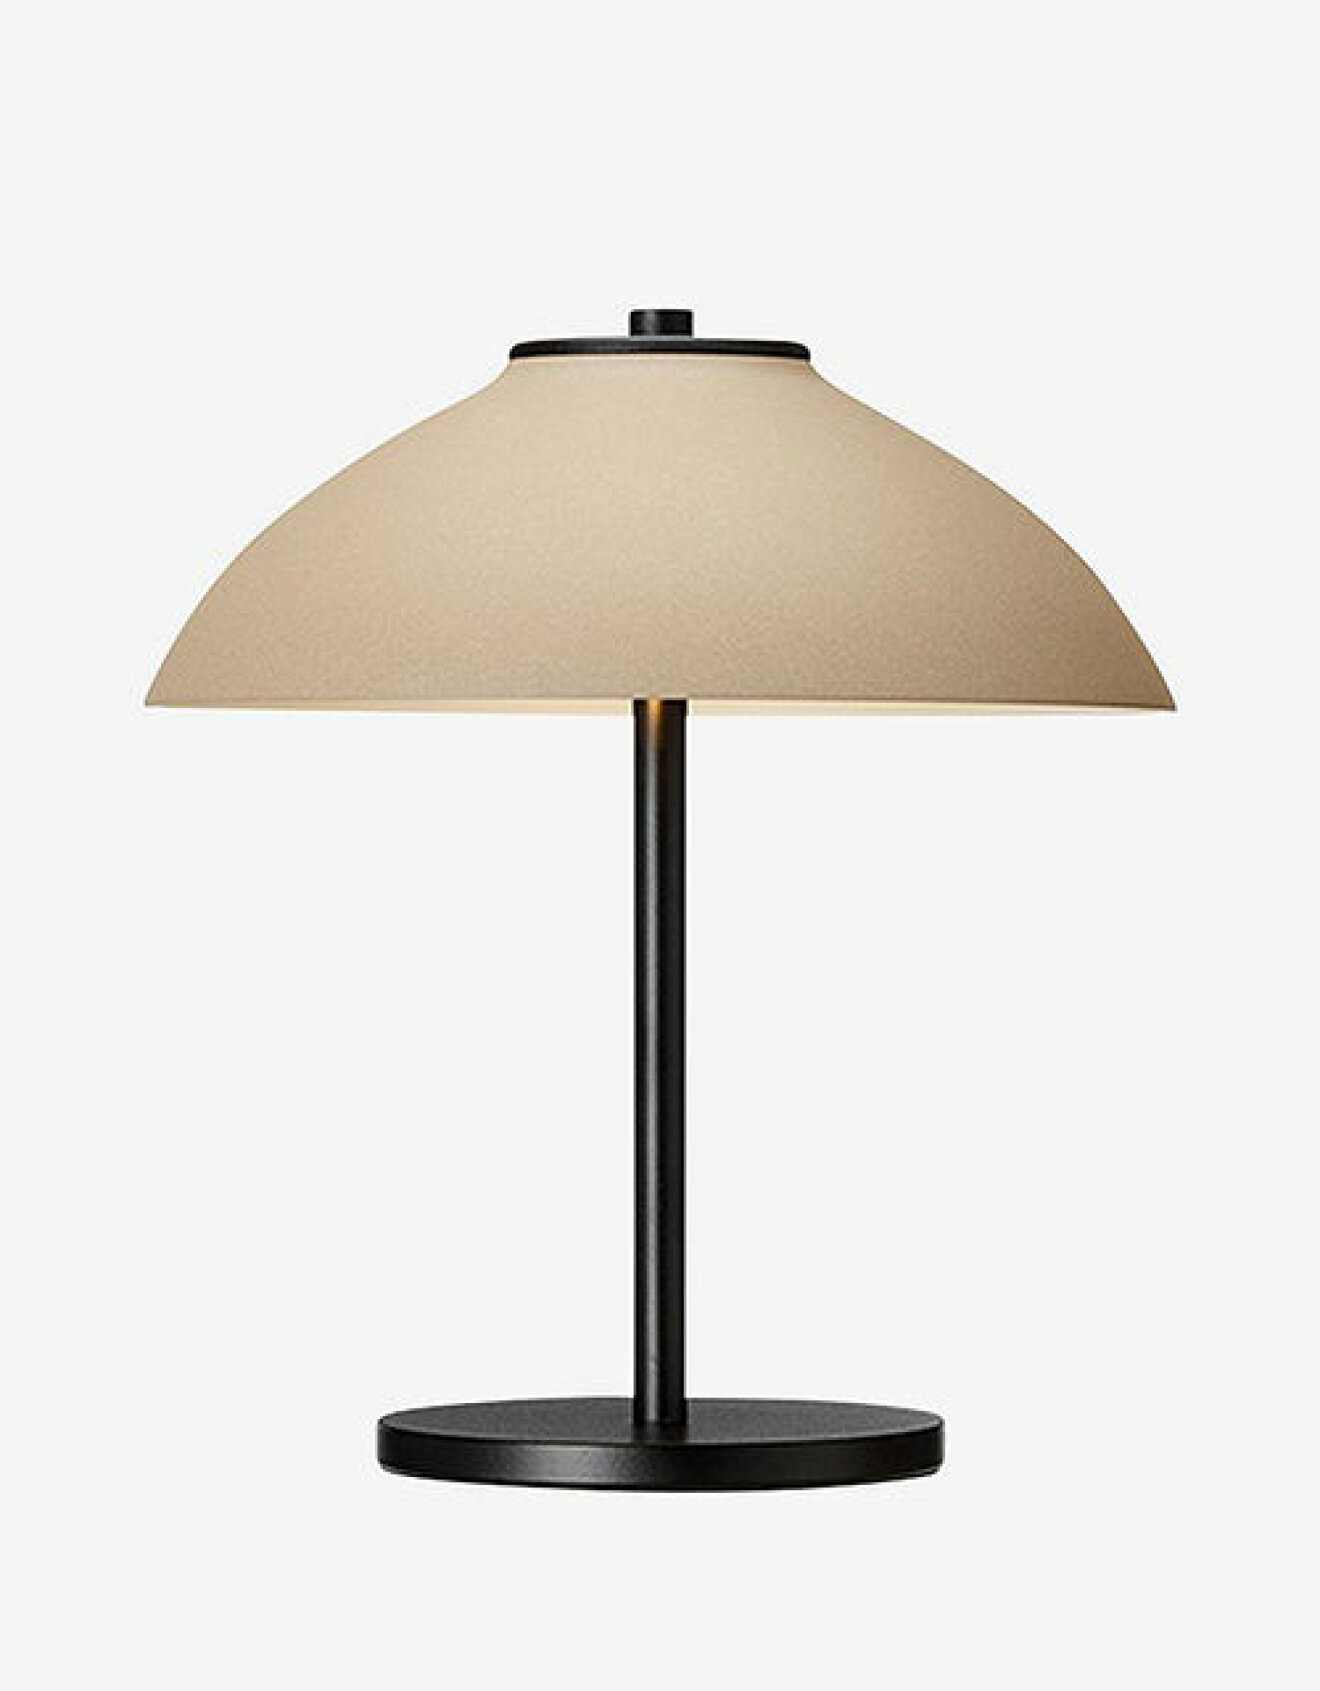 Bordslampa i skandinavisk design, Belid